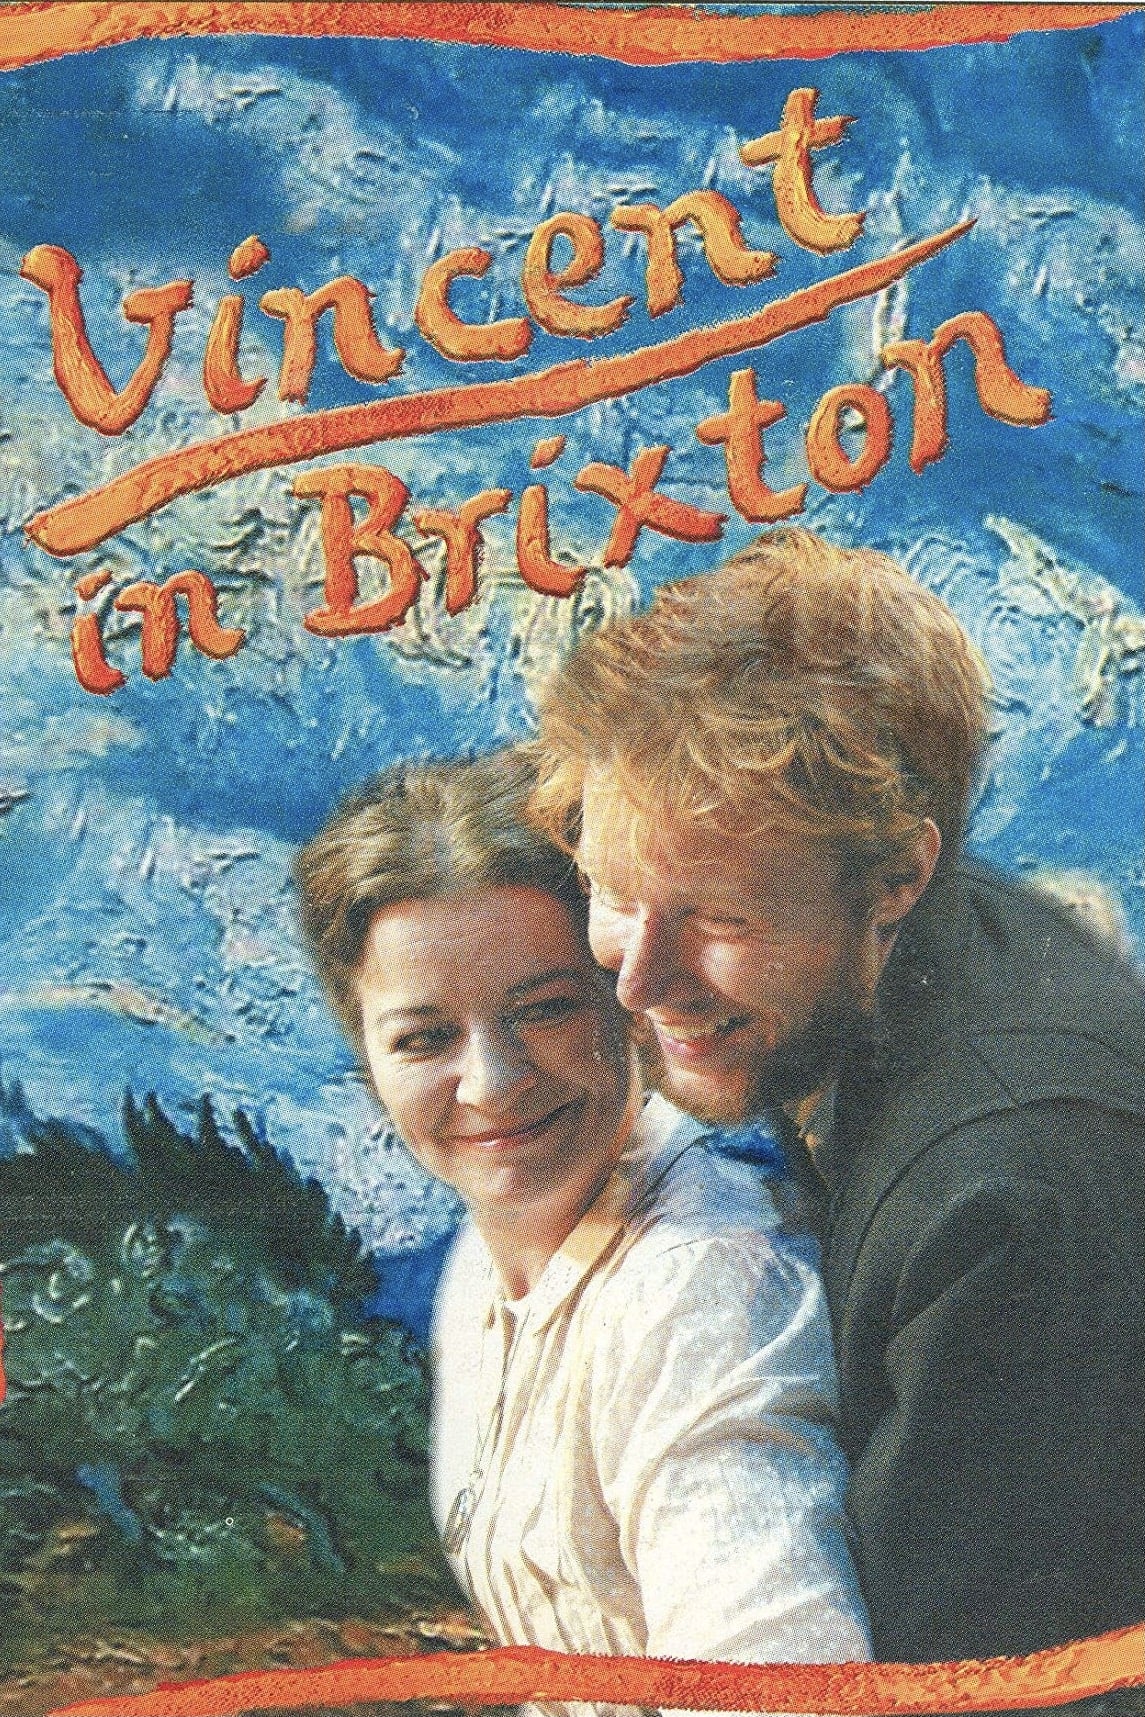 Vincent in Brixton (2003)